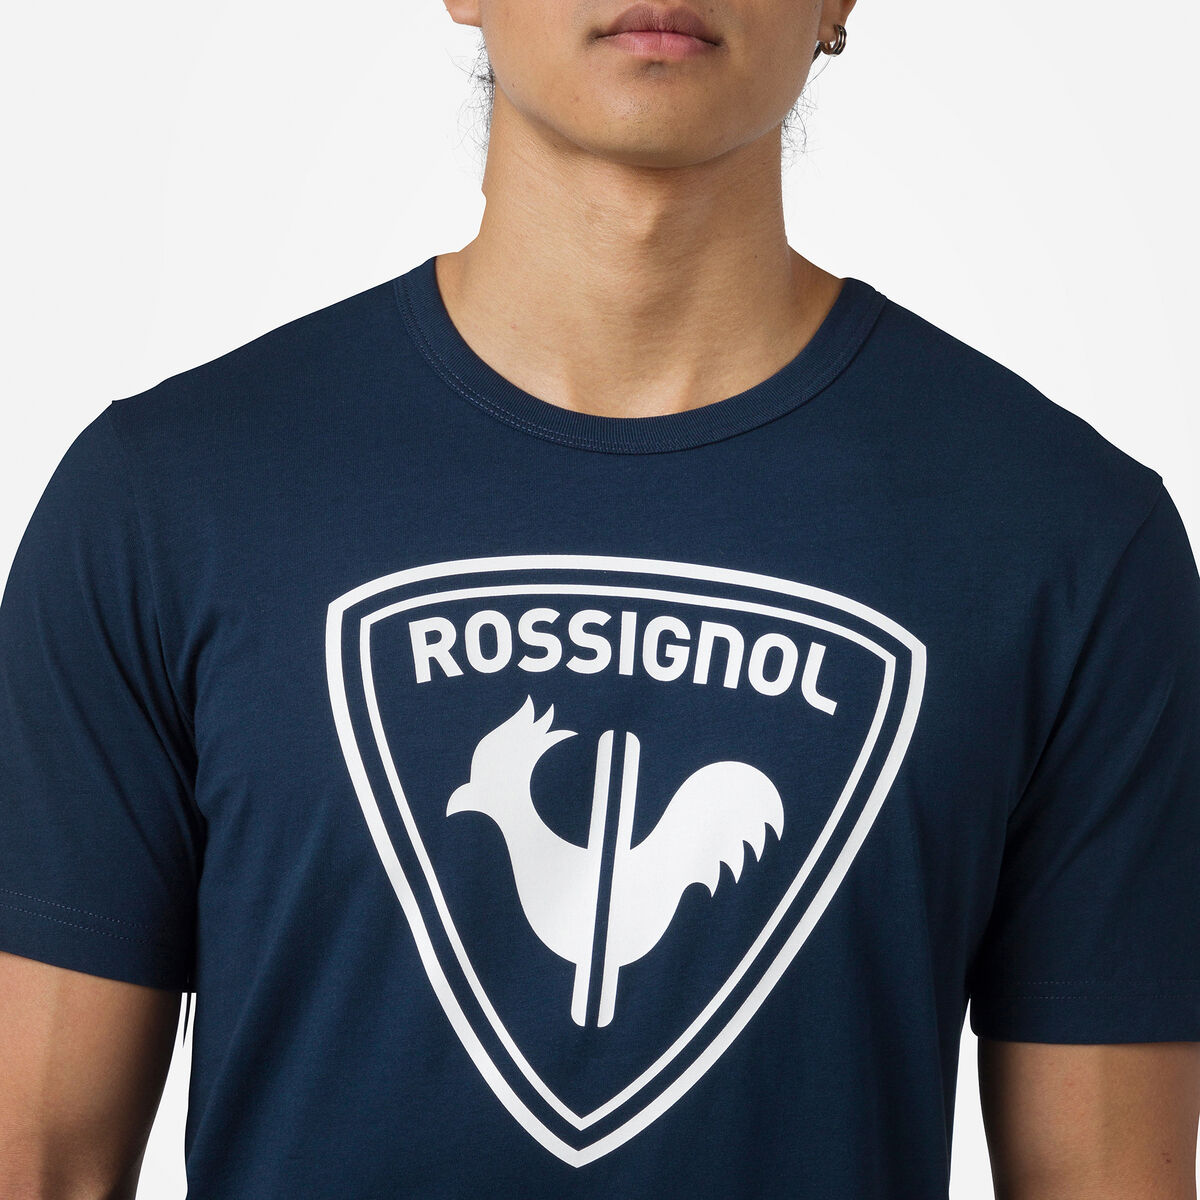 Rossignol Men's logo tee blue